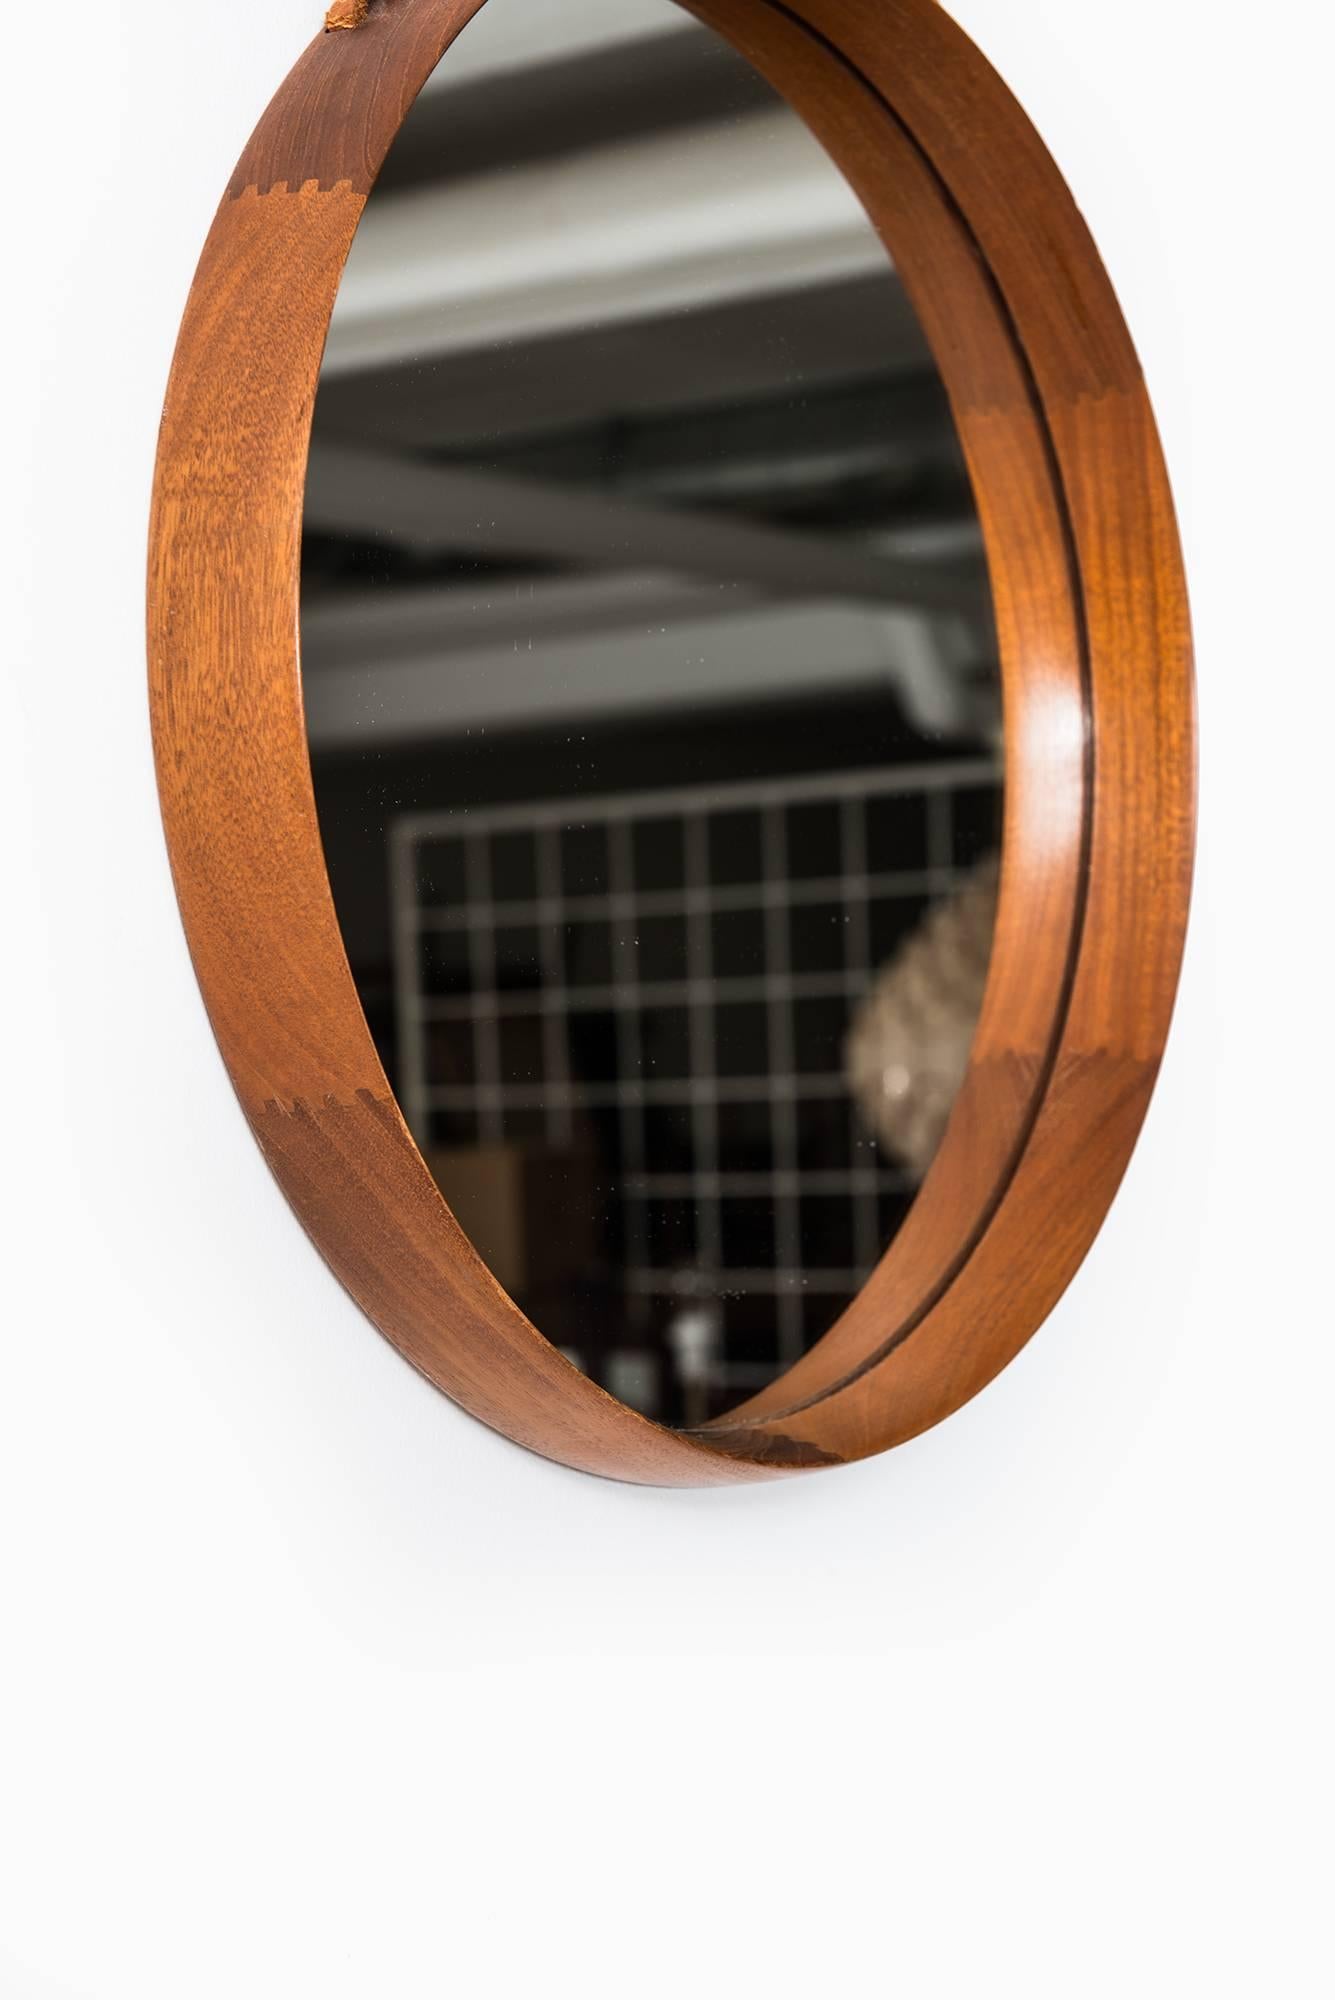 Round mirror in teak and leather designed by Uno & Östen Kristiansson. Produced by Luxus in Vittsjö, Sweden.